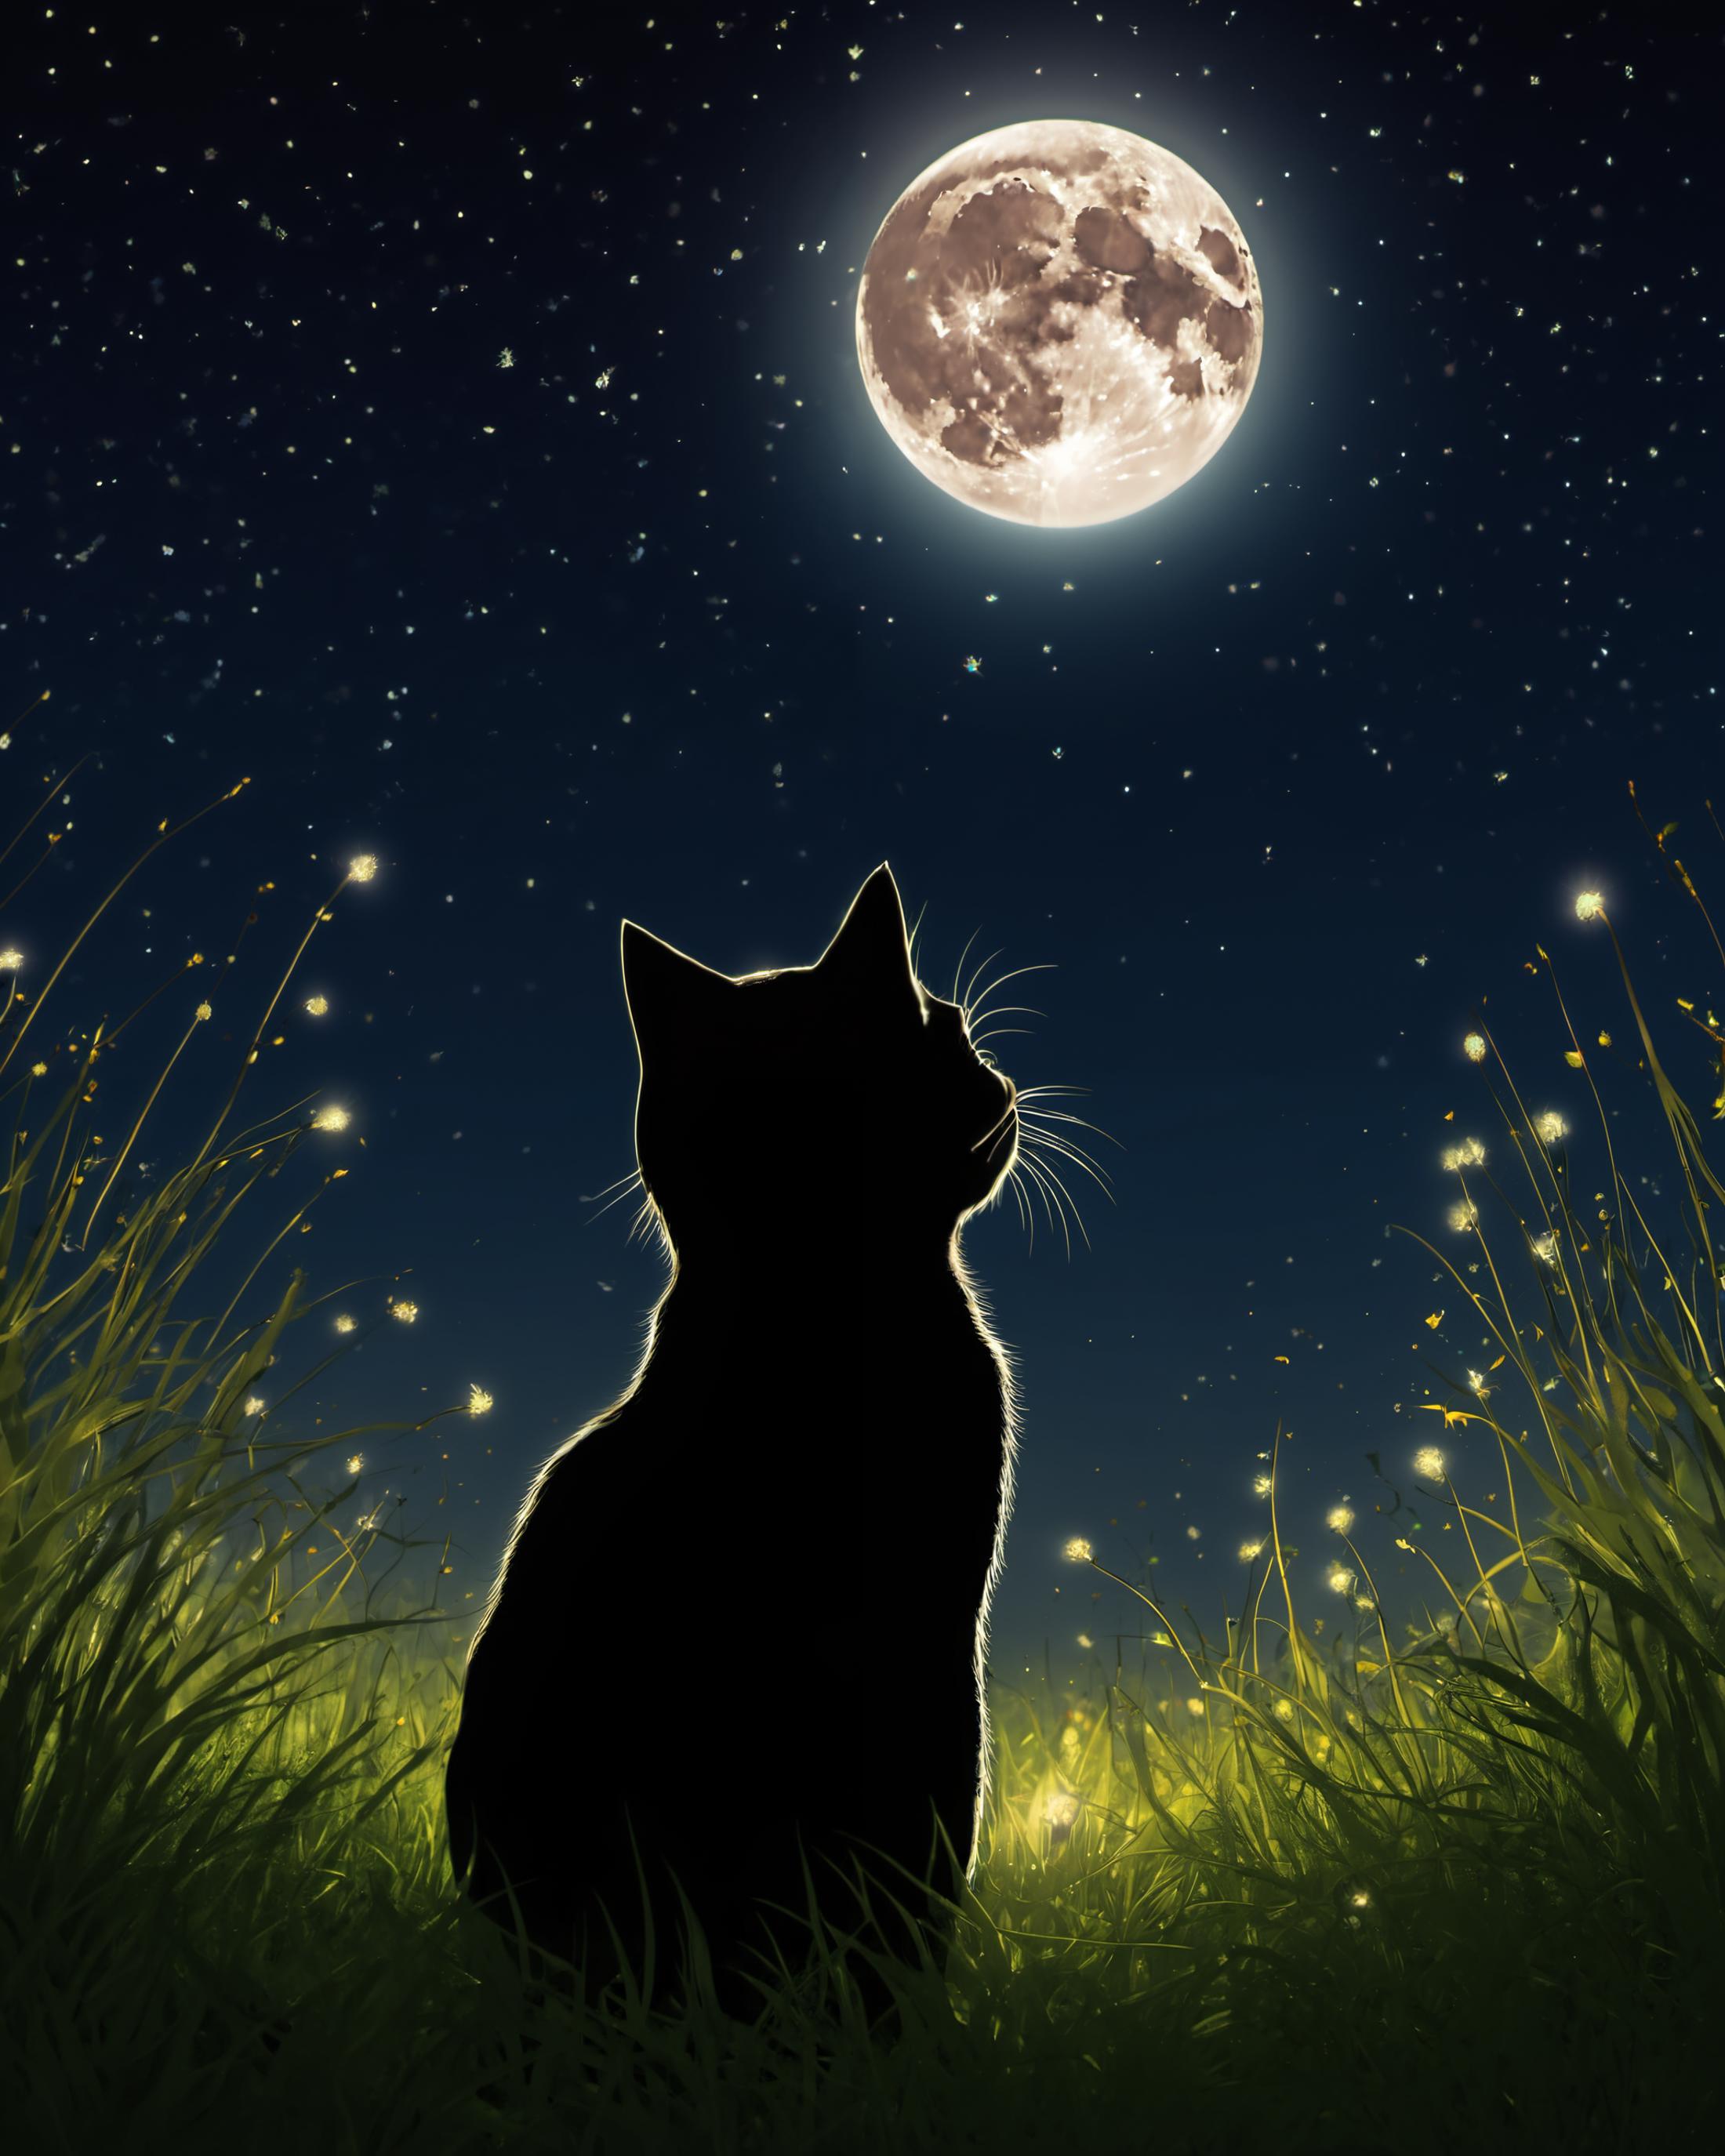 A black cat looking at the moon at night.